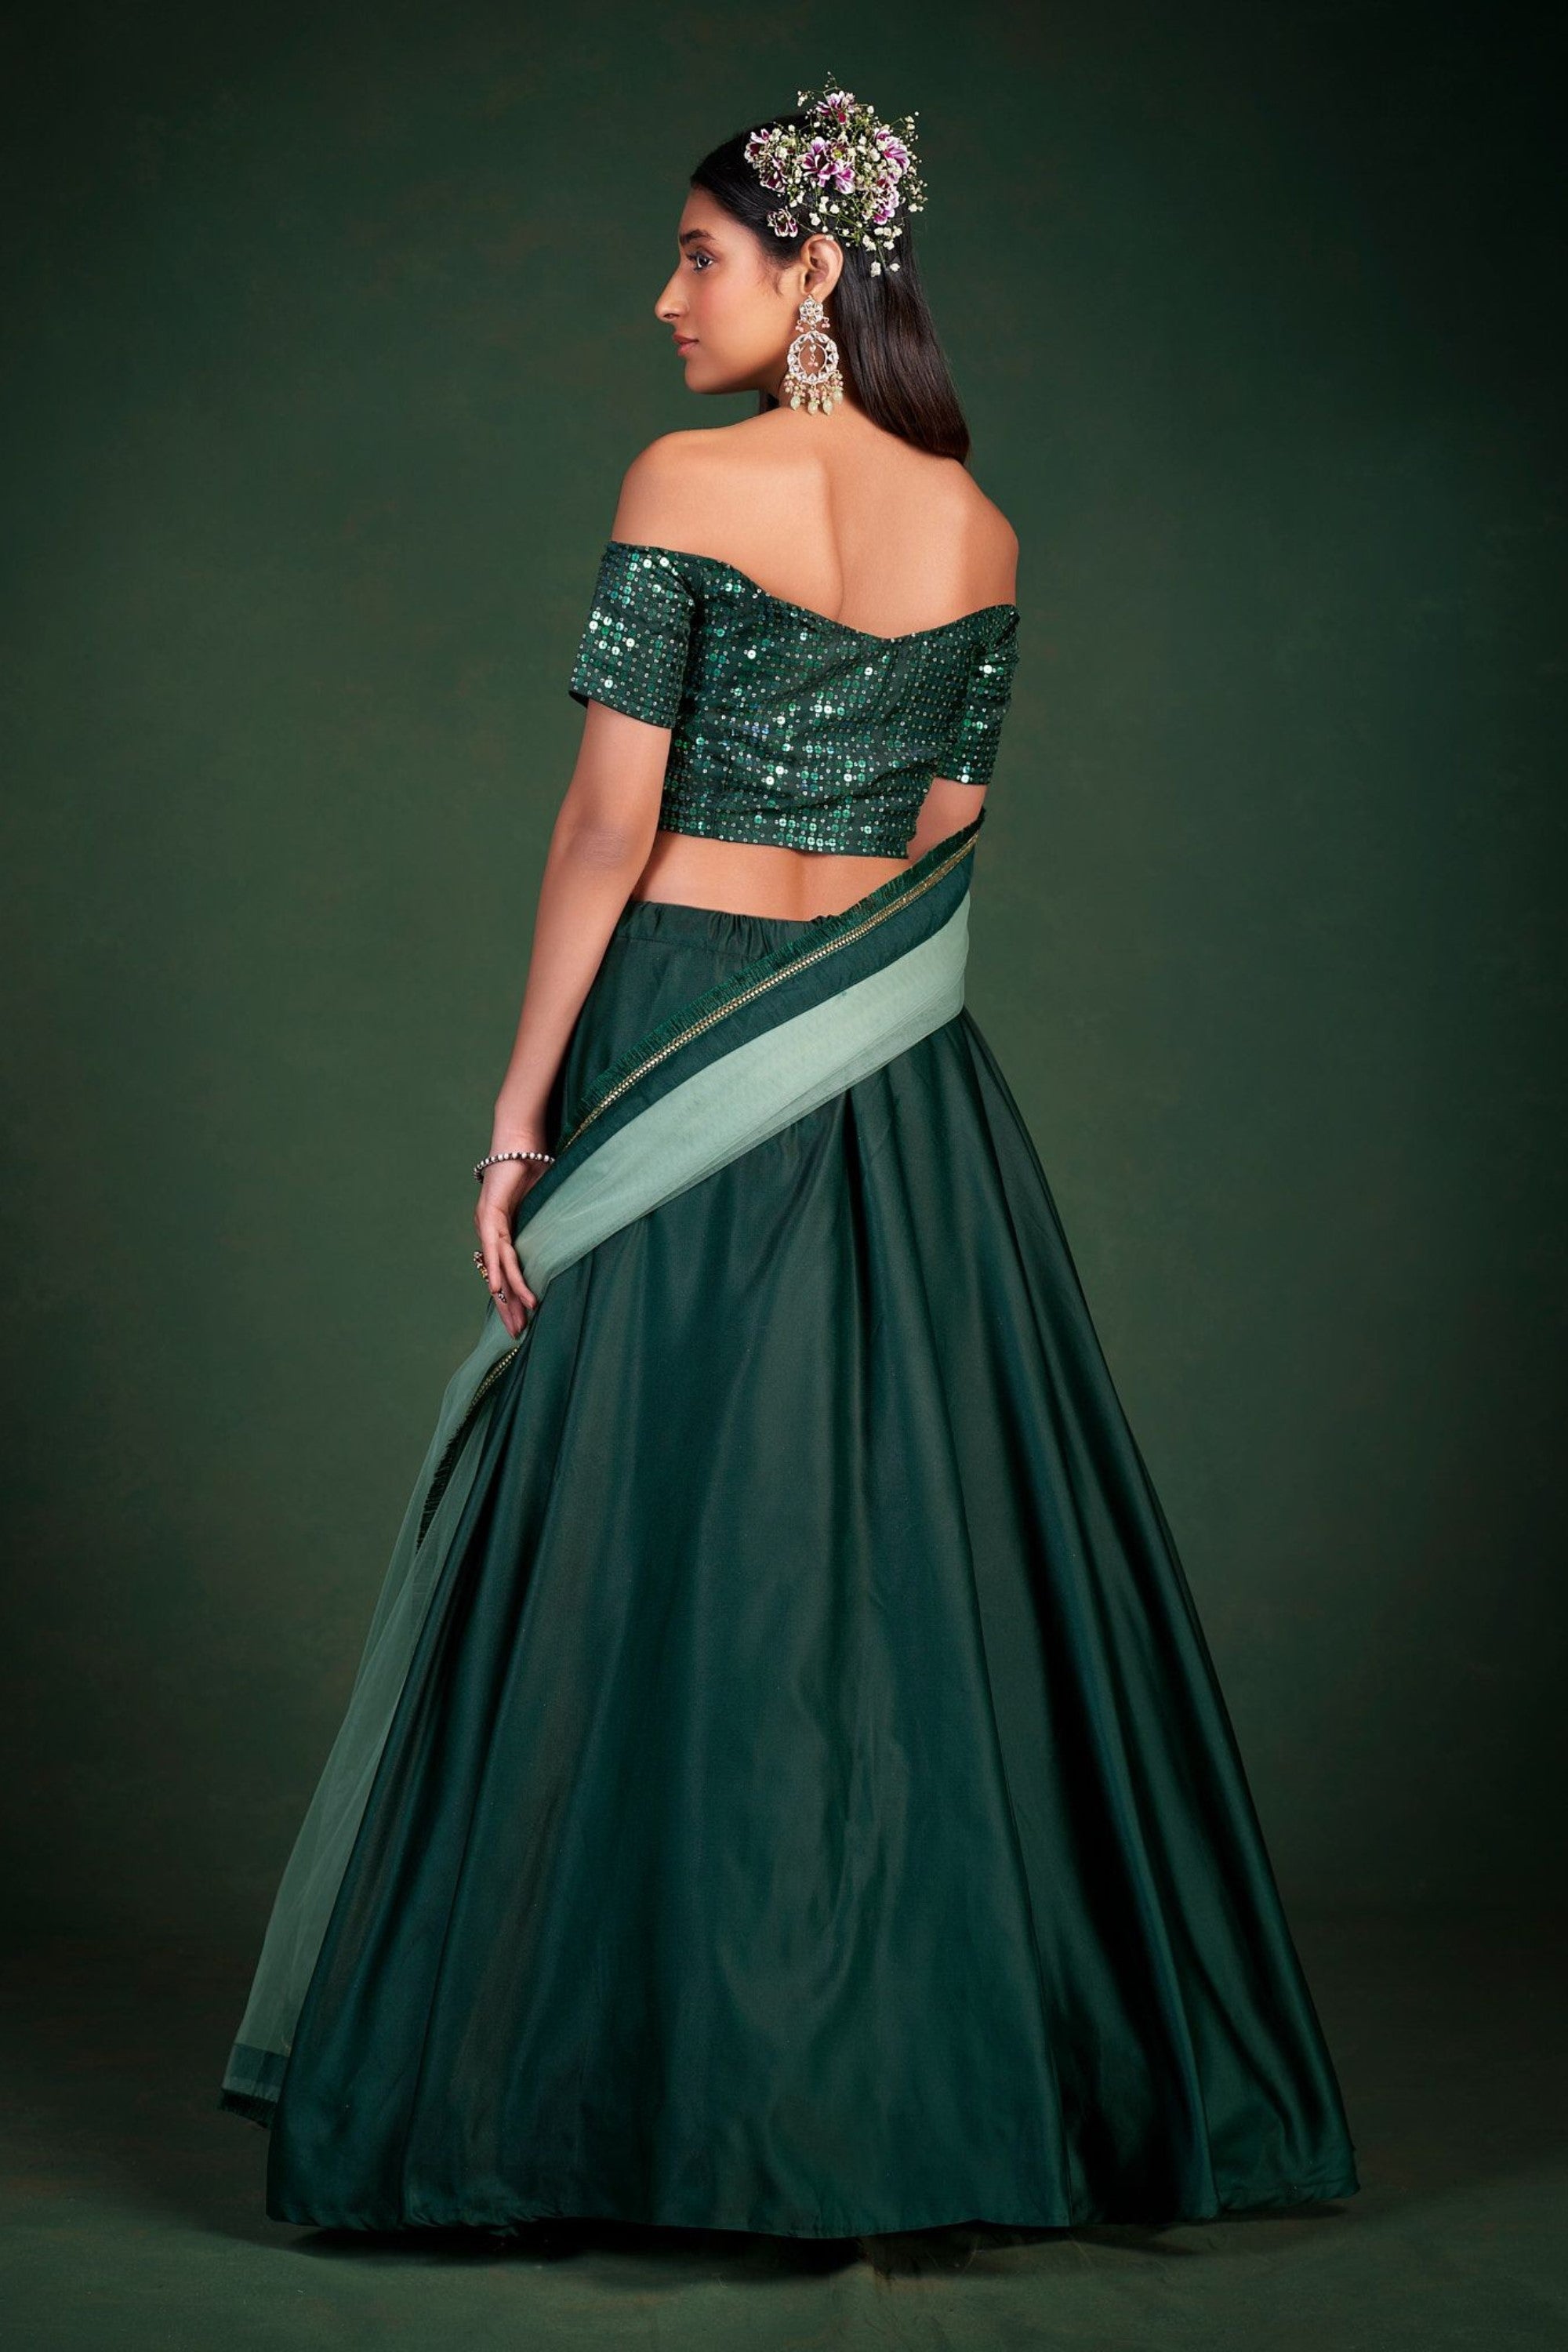 Lehenga Back Blouse Designs To Try This Wedding Season | Femina.in